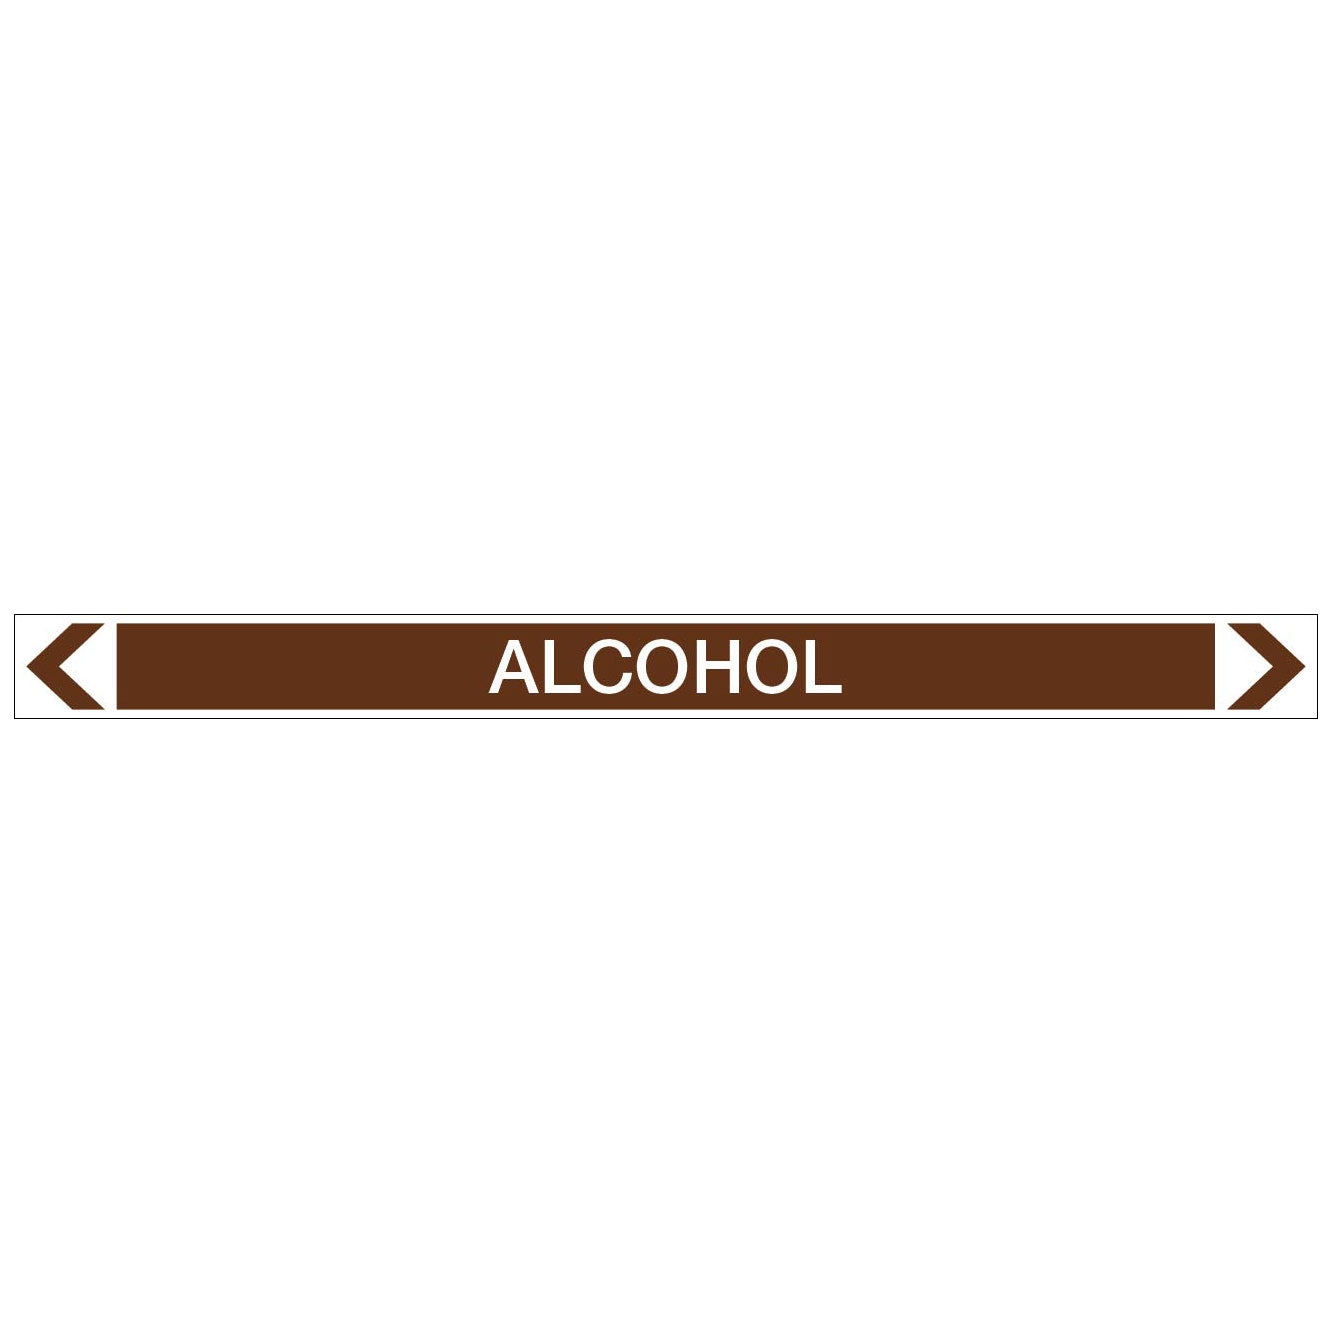 Oils - Alcohol - Pipe Marker Sticker